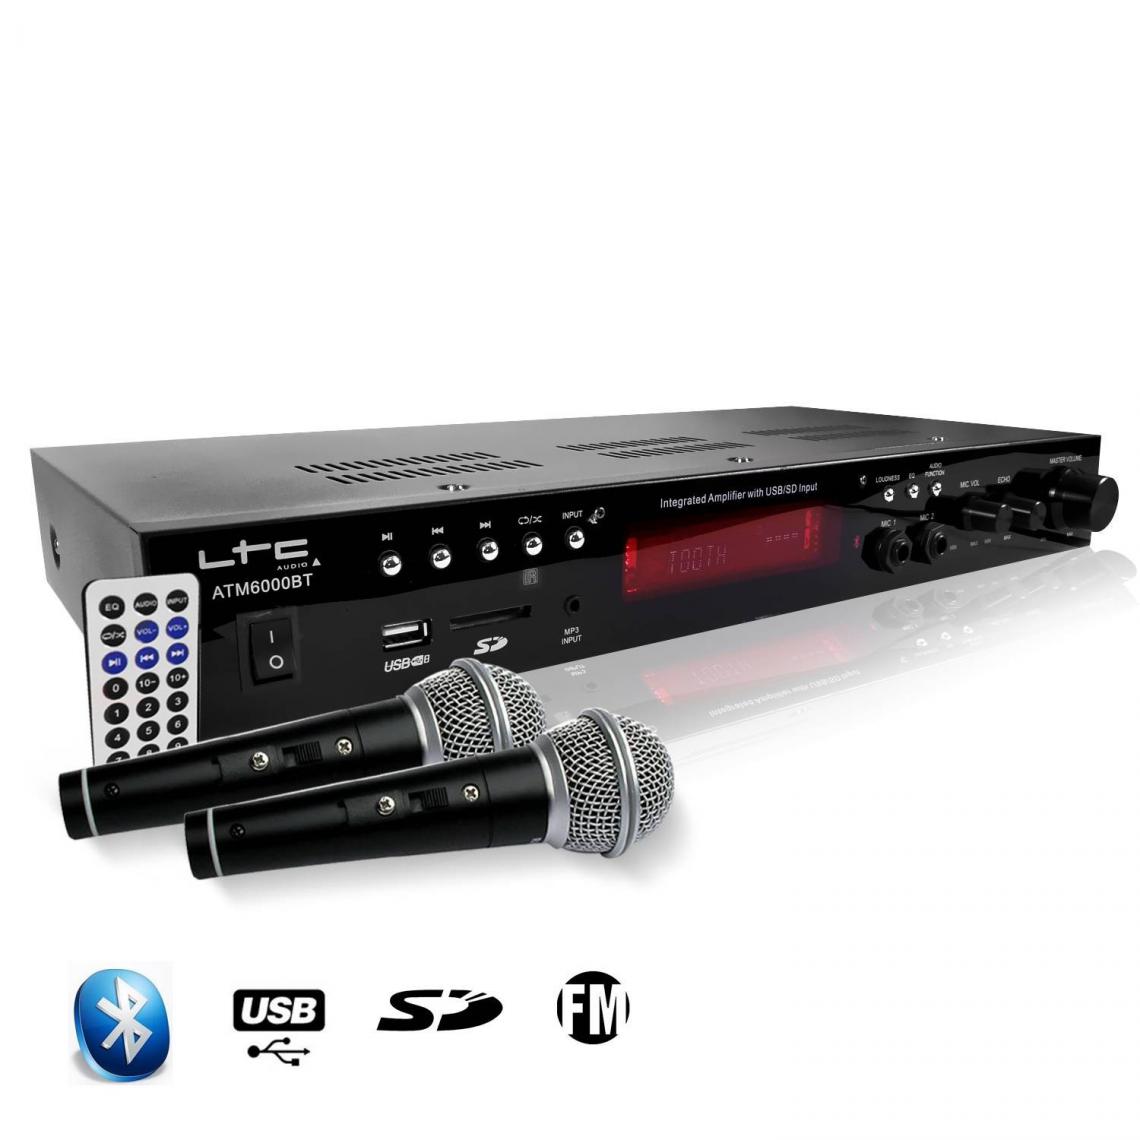 Ltc Audio - Amplificateur HIFI stéréo KARAOKE 2x50W - BLUETOOTH/USB/SD/FM + 2 Microphones noir/silver - Ampli